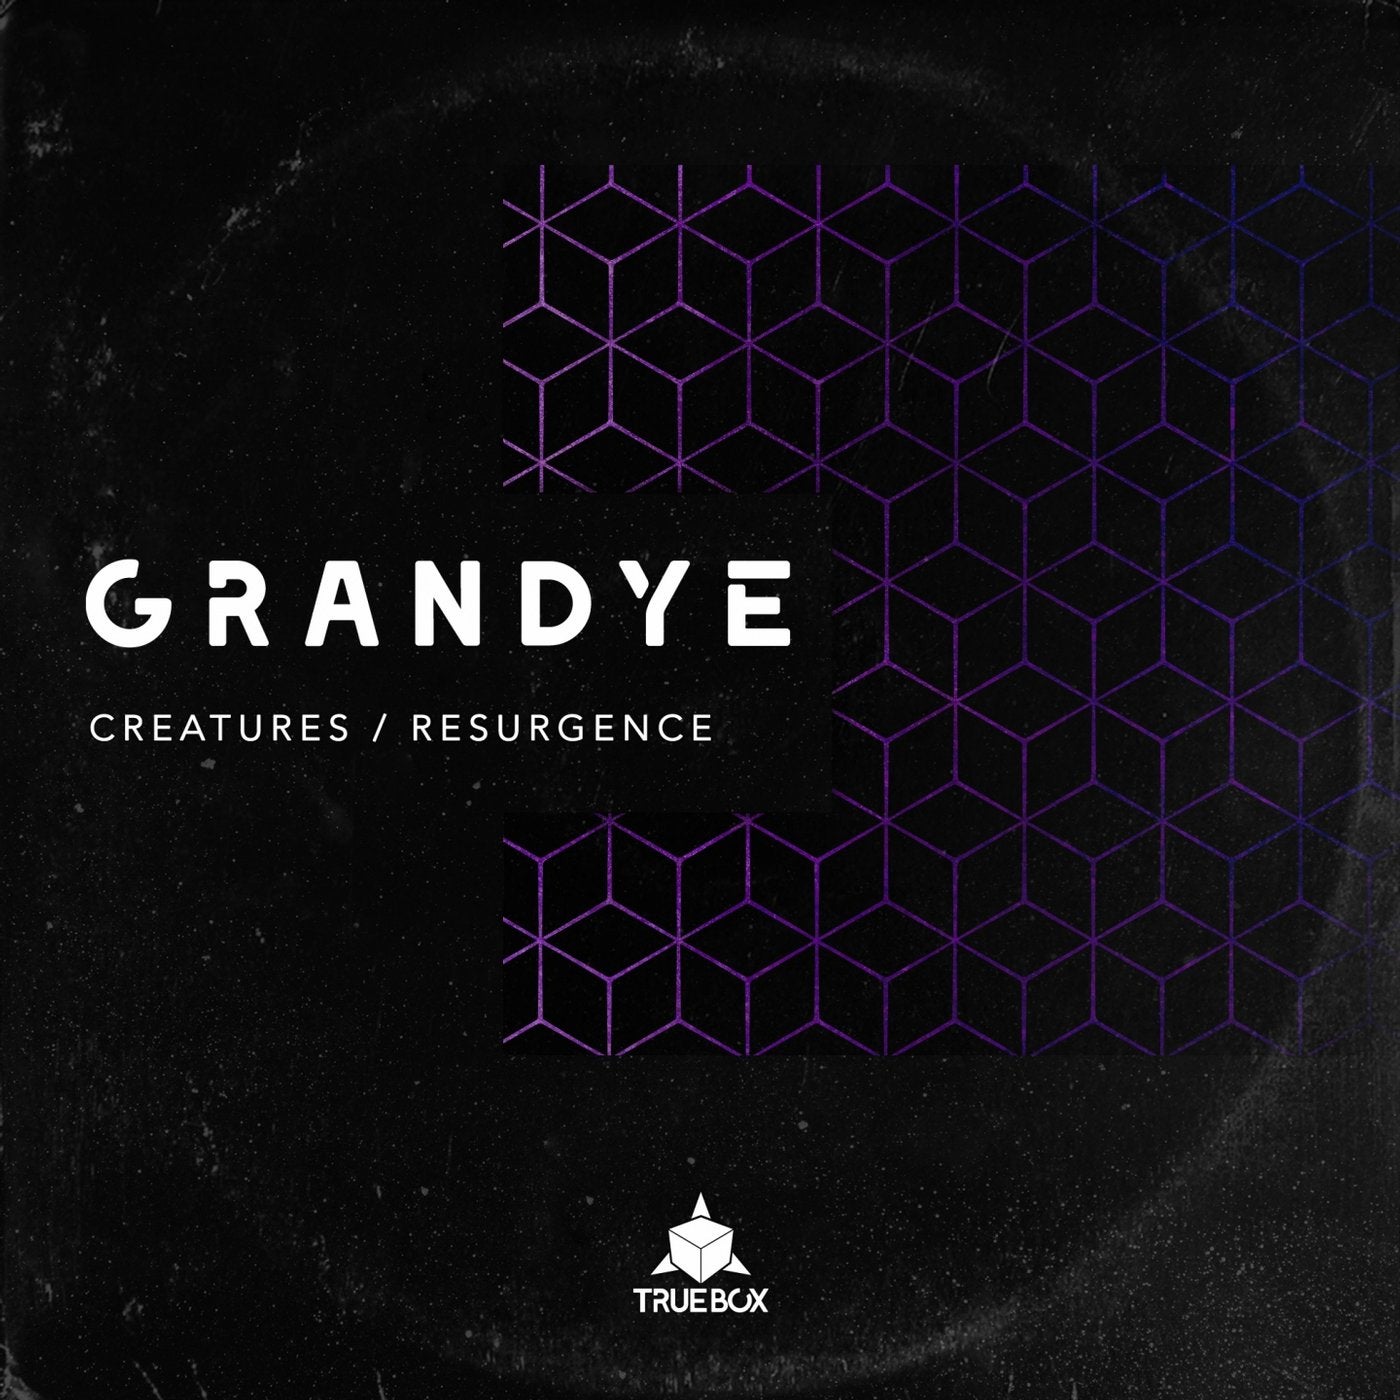 Creatures / Resurgence